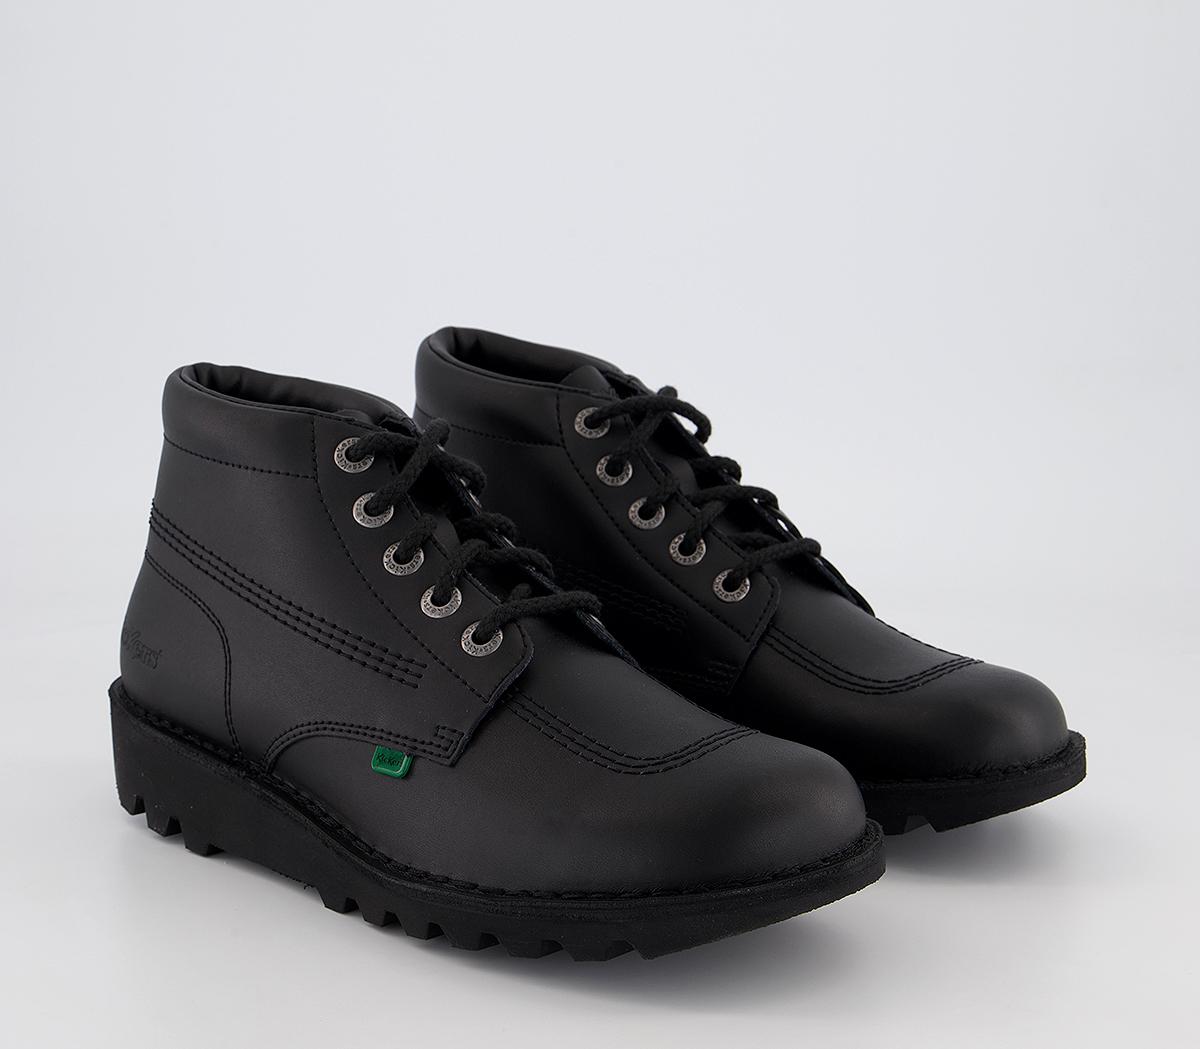 Kickers Mens Kick Hi (m) Black Leather Boots, 7